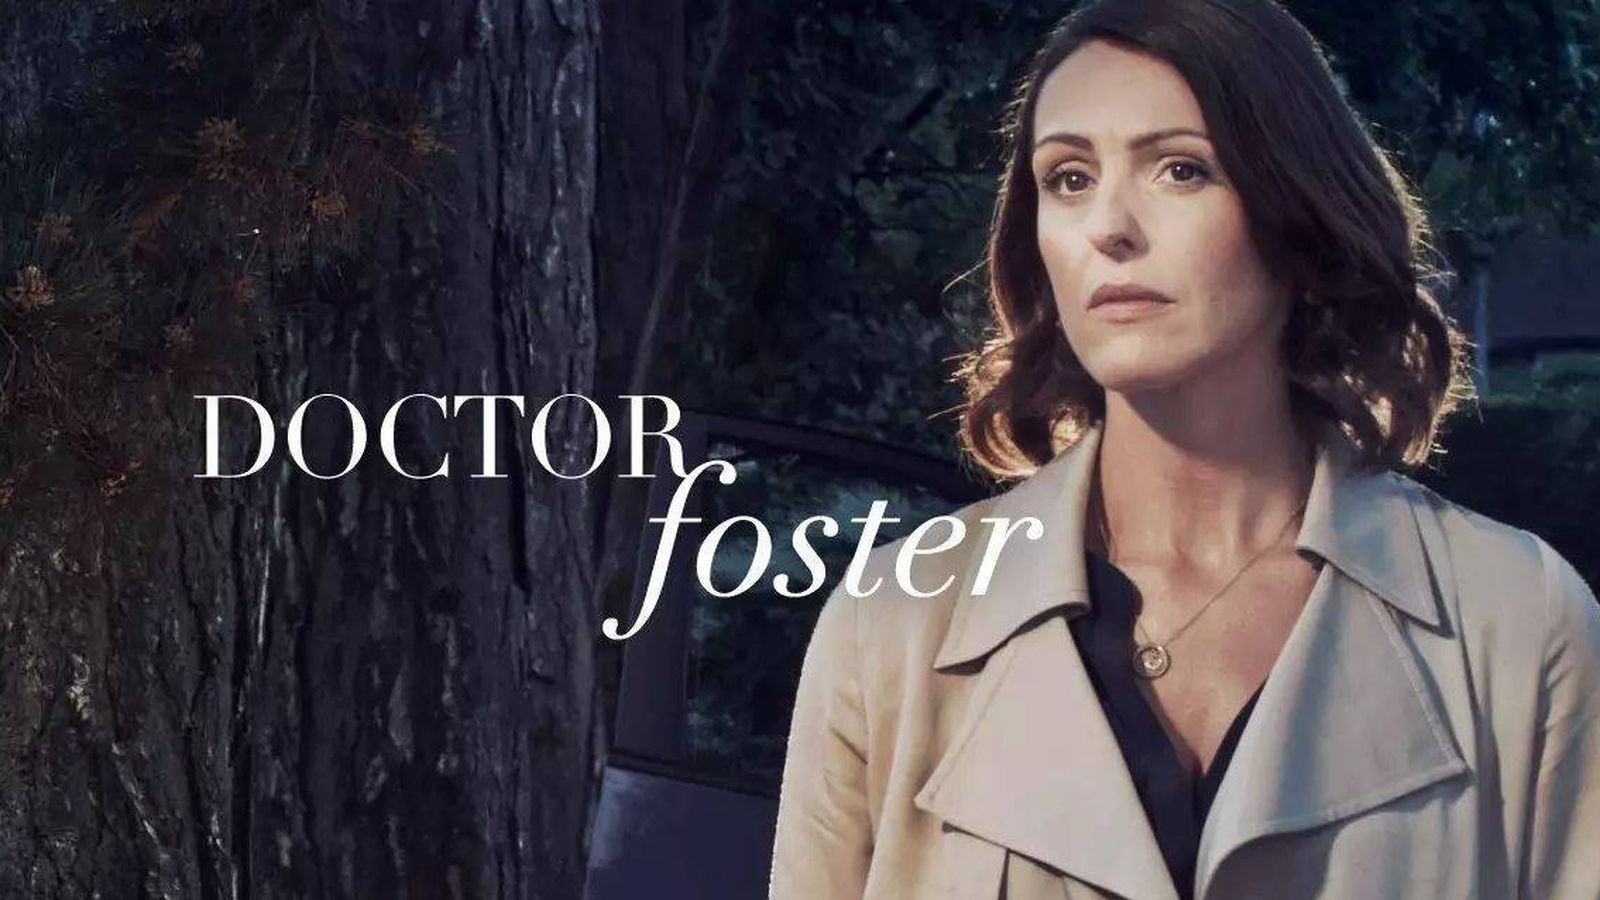 Foto: Imagen promocional de la serie 'Doctor Foster'.